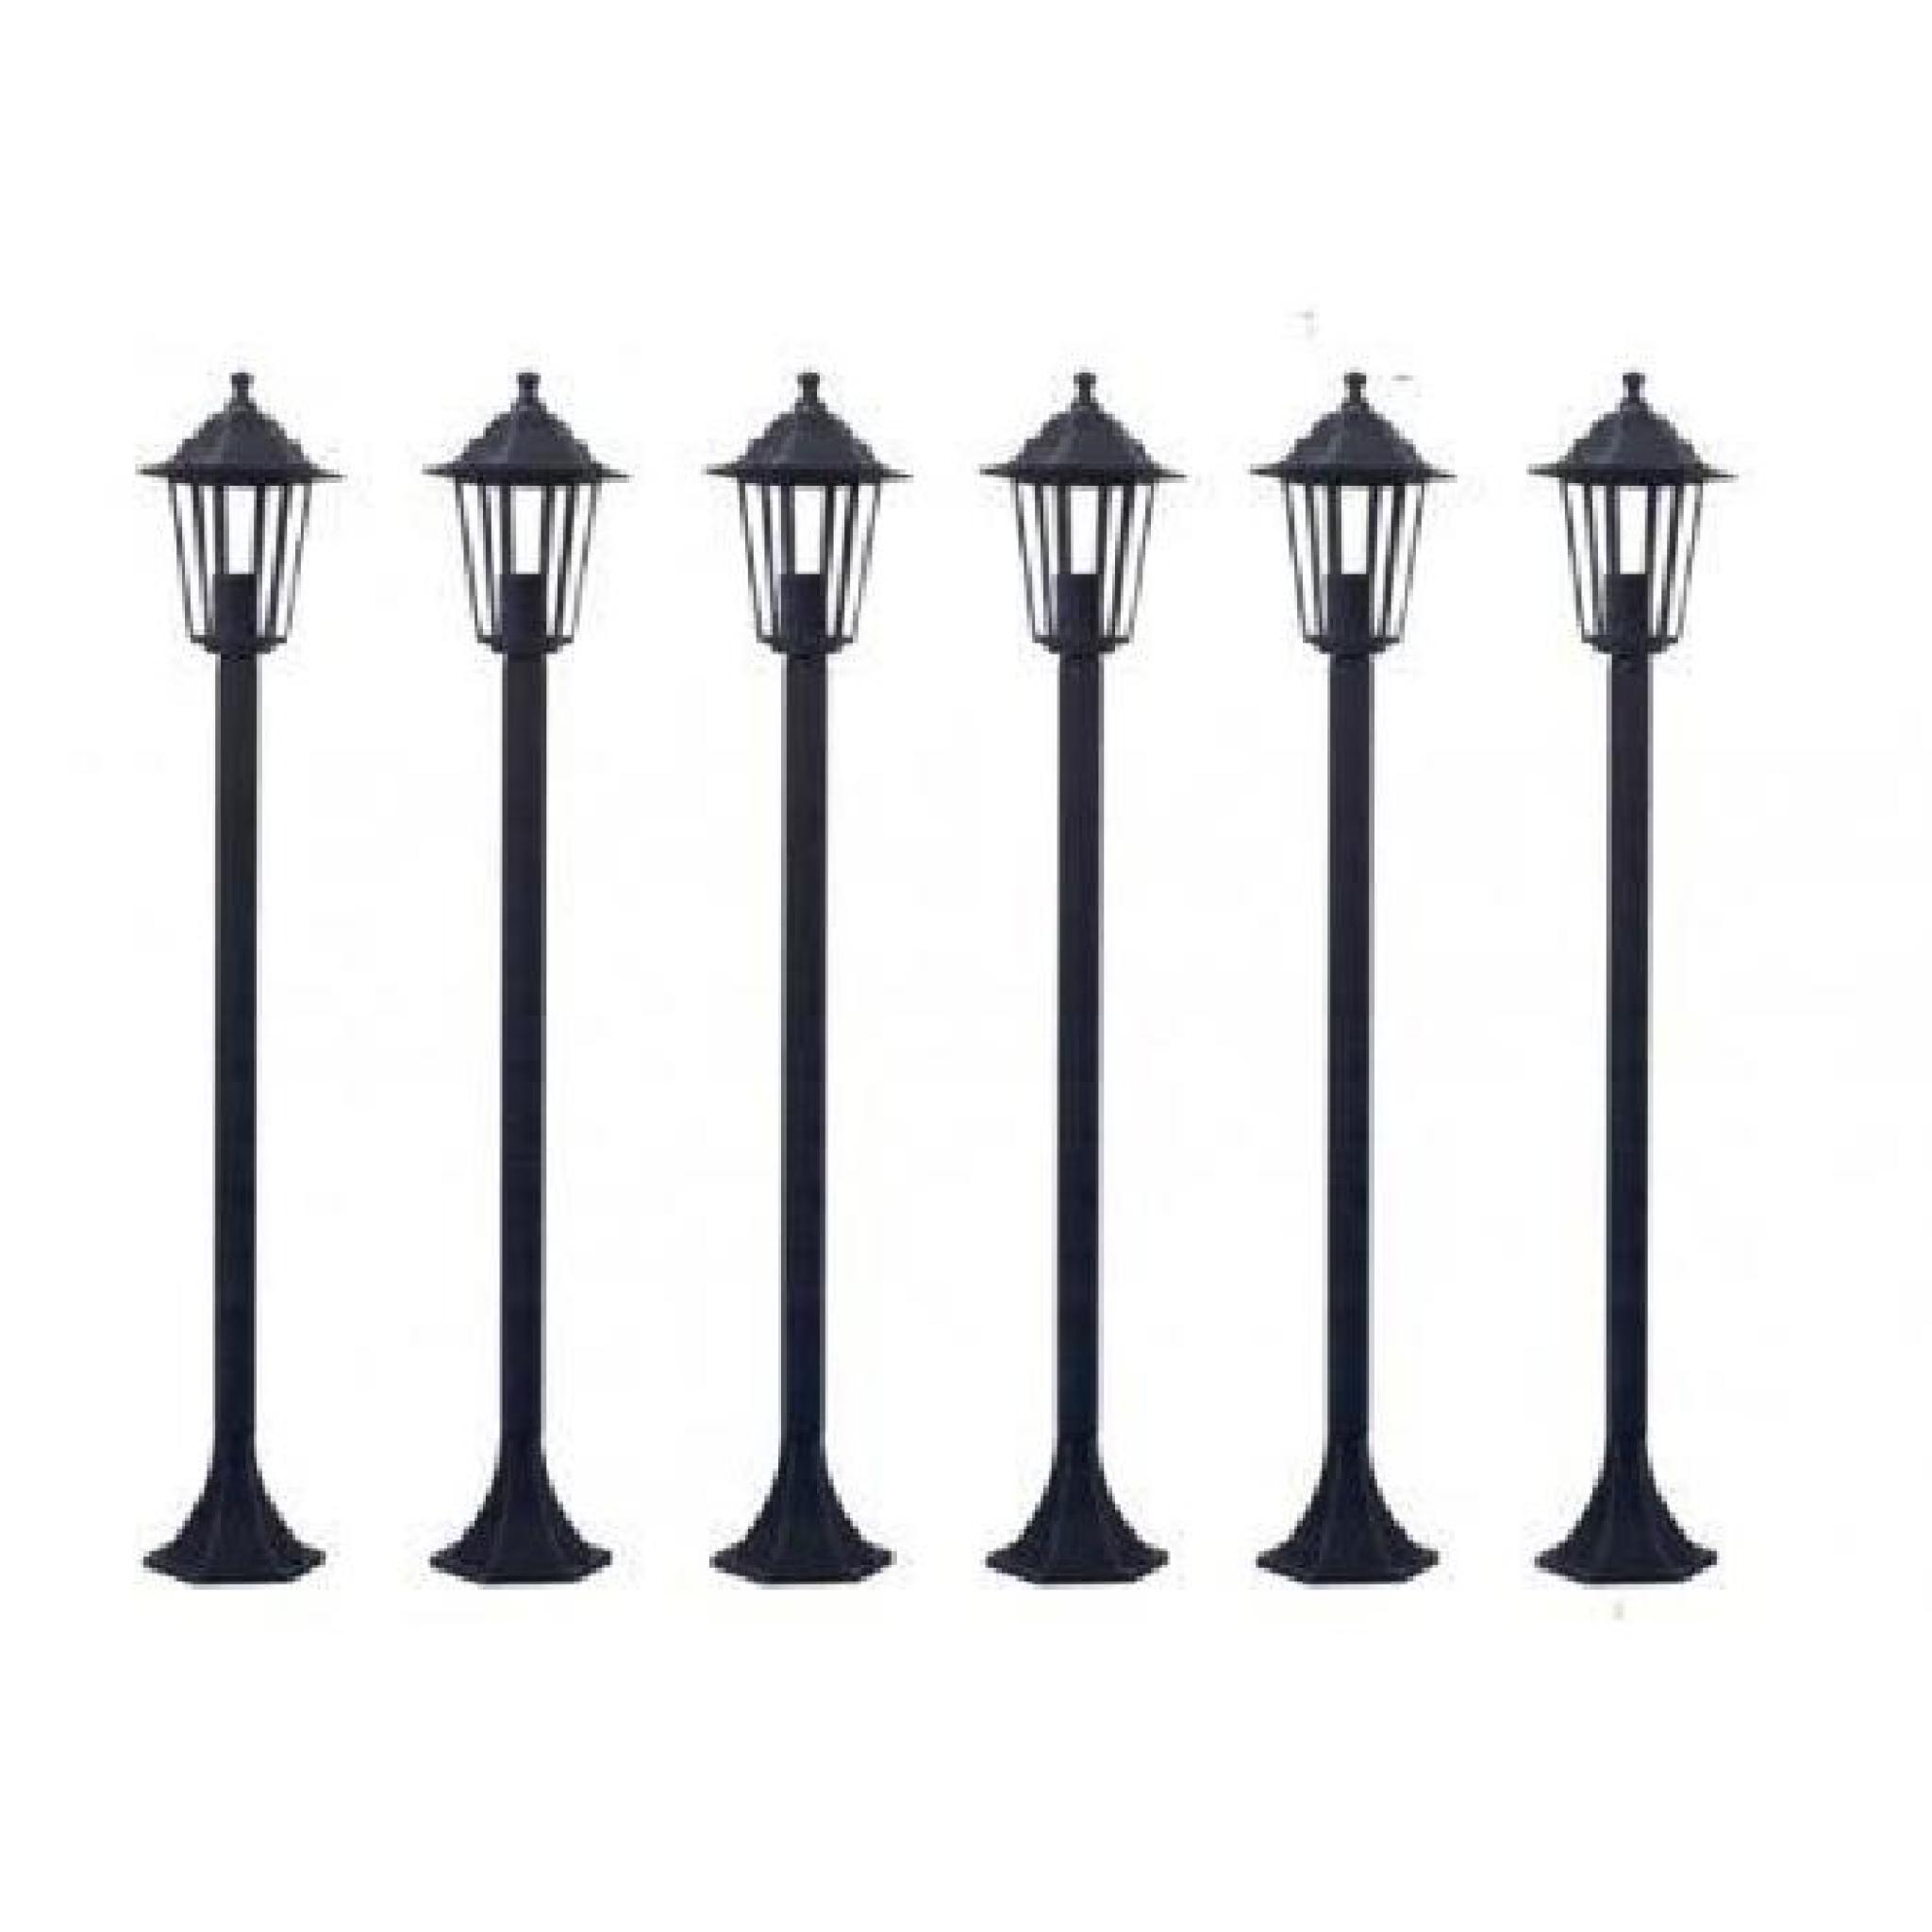 6 lampadaires de jardin hauteur 110 cm noir